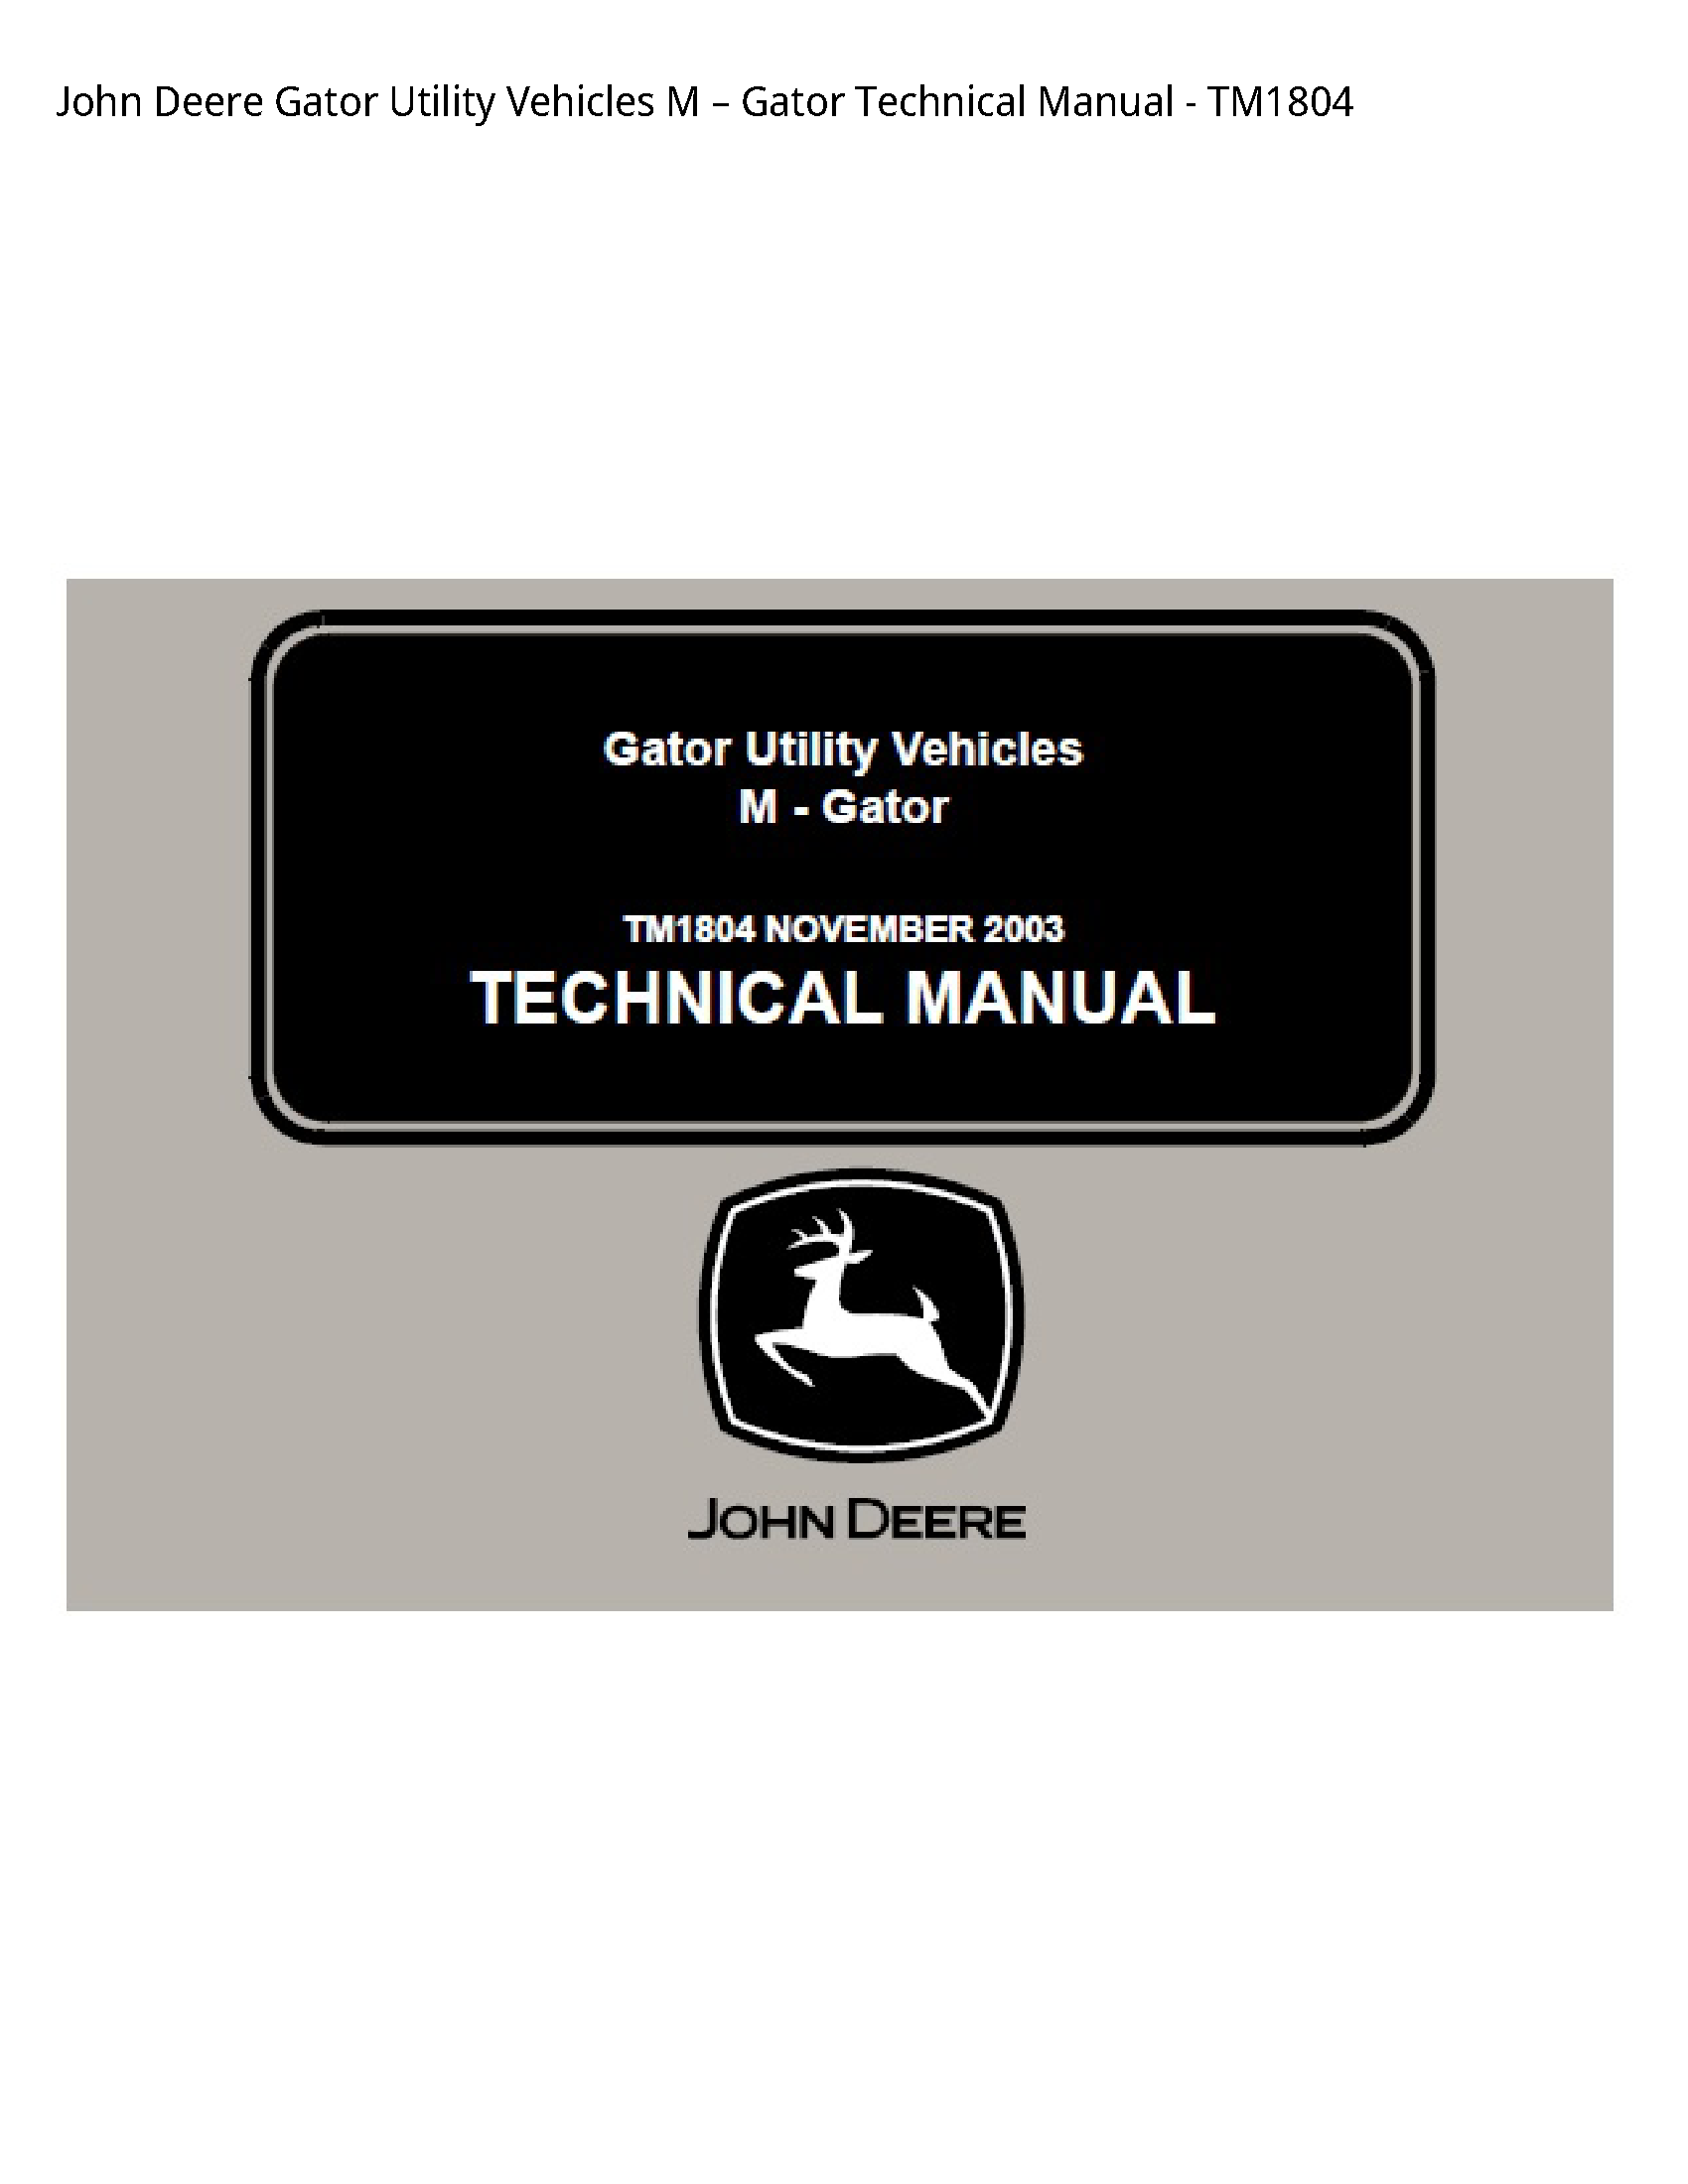 John Deere Gator Utility Vehicles Gator Technical manual